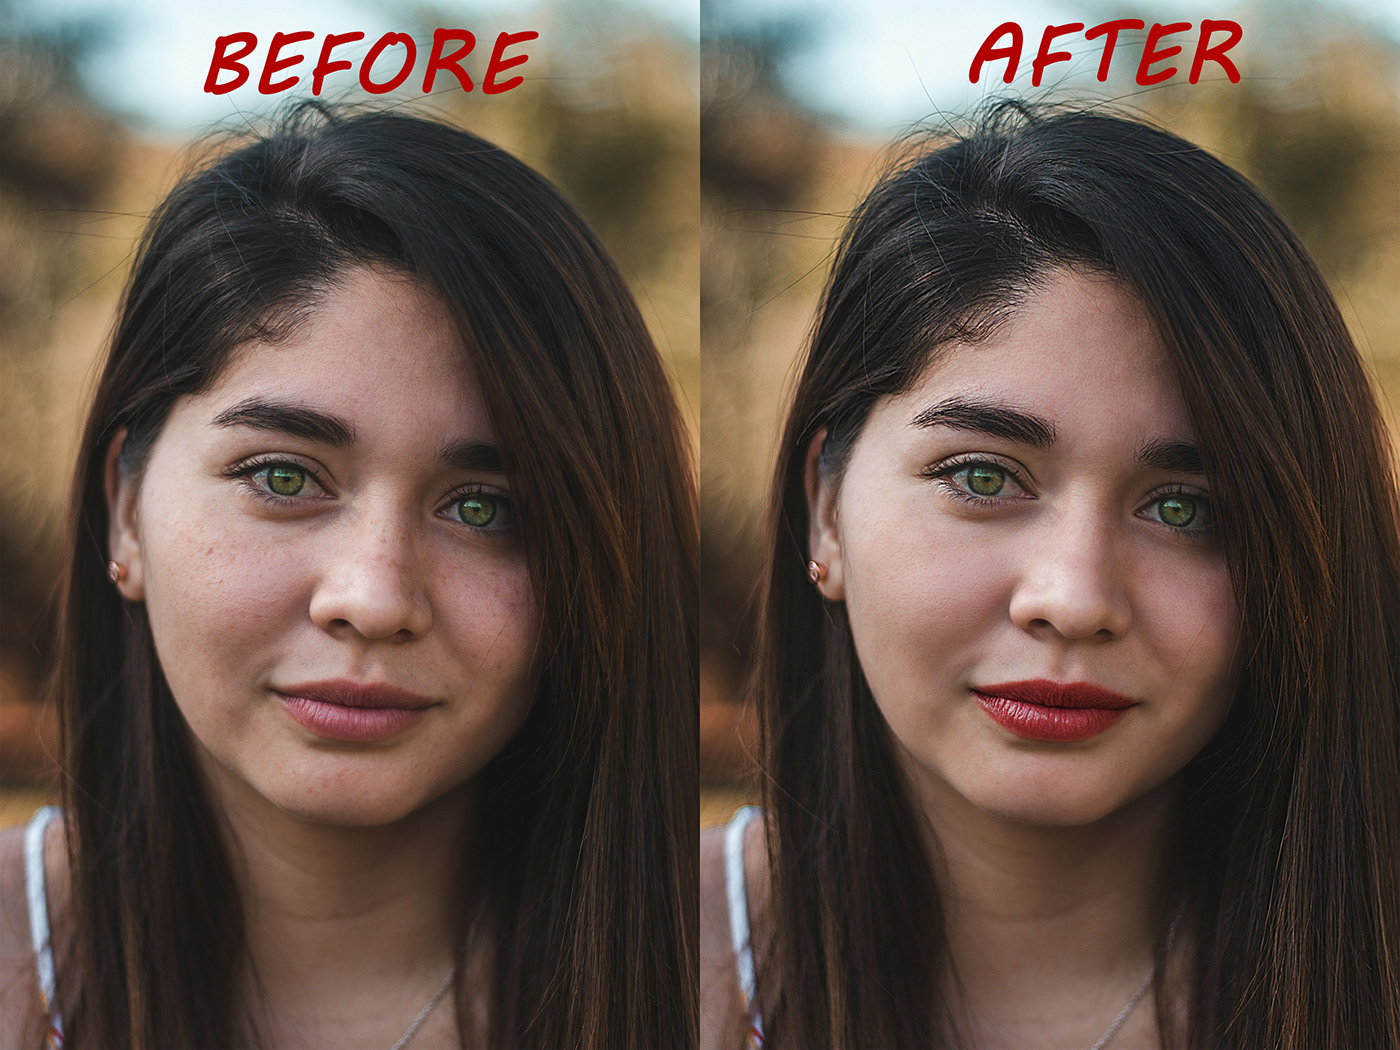 photo editing retouching  Editing  Image Editing Photo Retouching image retouch skin retouch beauty retouch human face spot remove